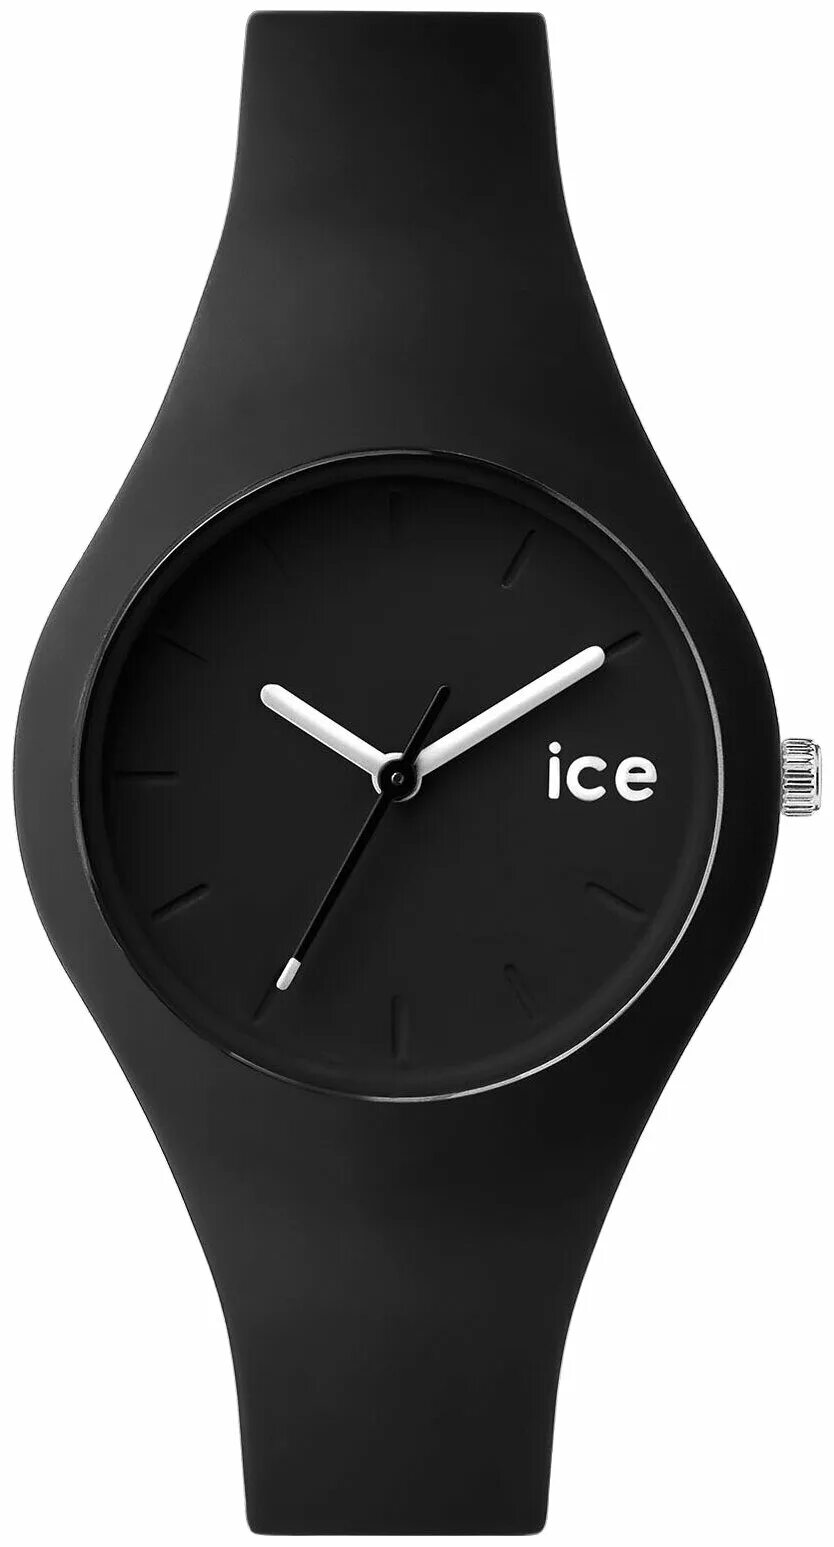 Часы Ice watch 017321. Айс вотч часы женские. Наручные часы Ice-watch XX.BK.XL.S.11. Часы унисекс дизайнерские.